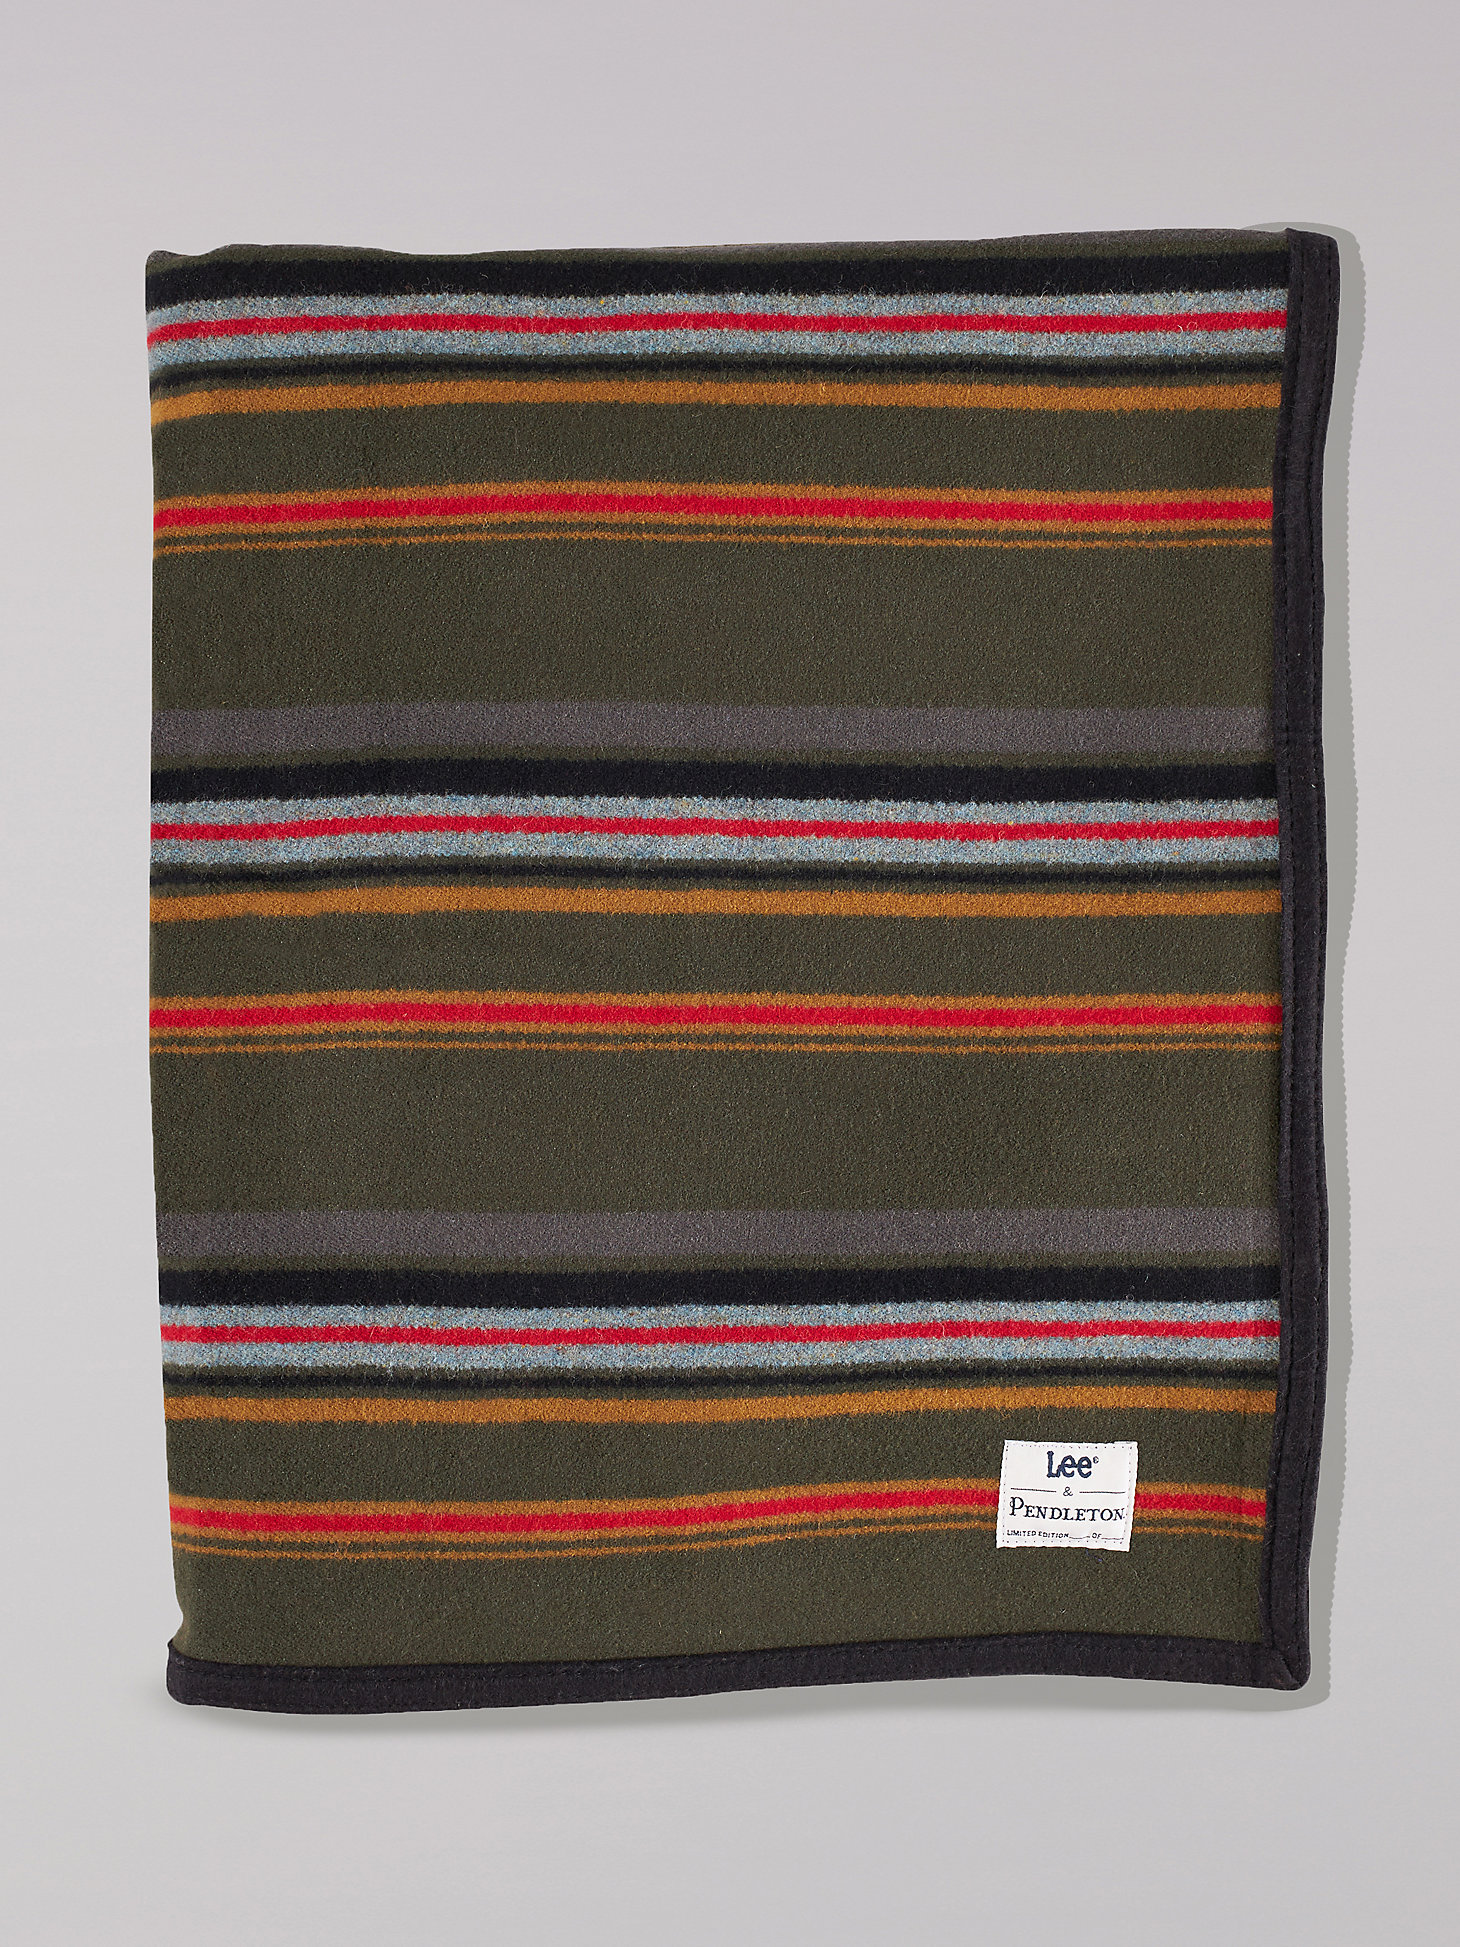 Lee Pendleton Wool Blanket:Striped:ONE SIZE alternative view 3